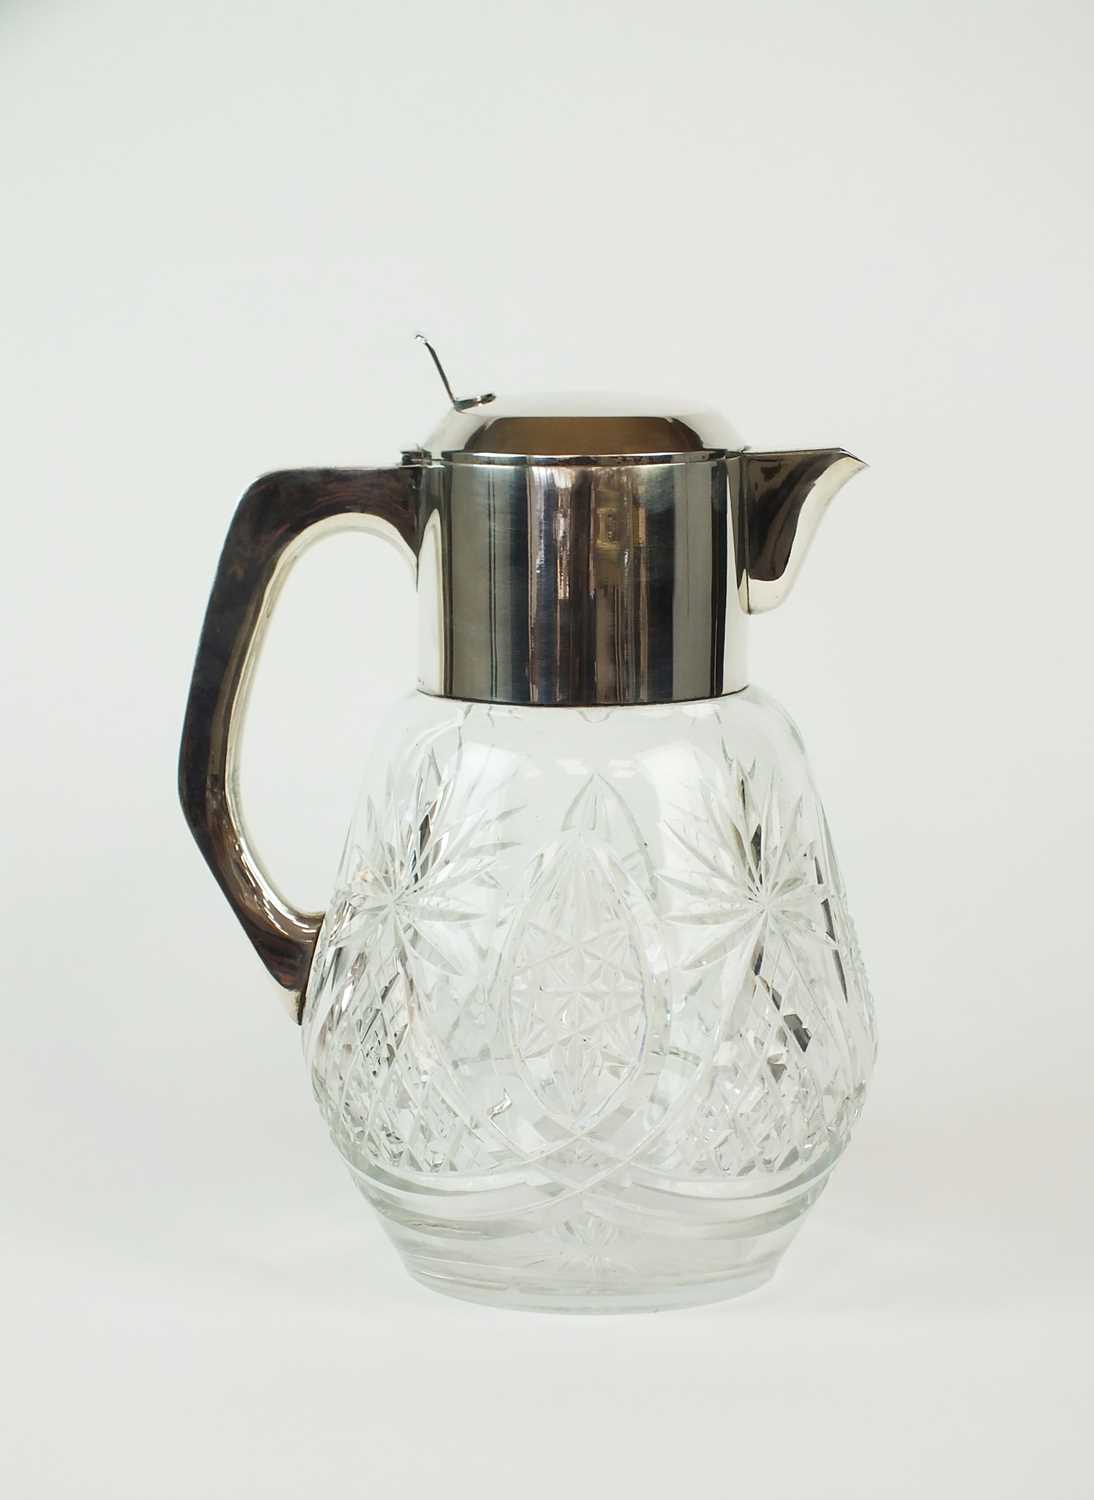 Lot 104 - A large German silver mounted glass jug